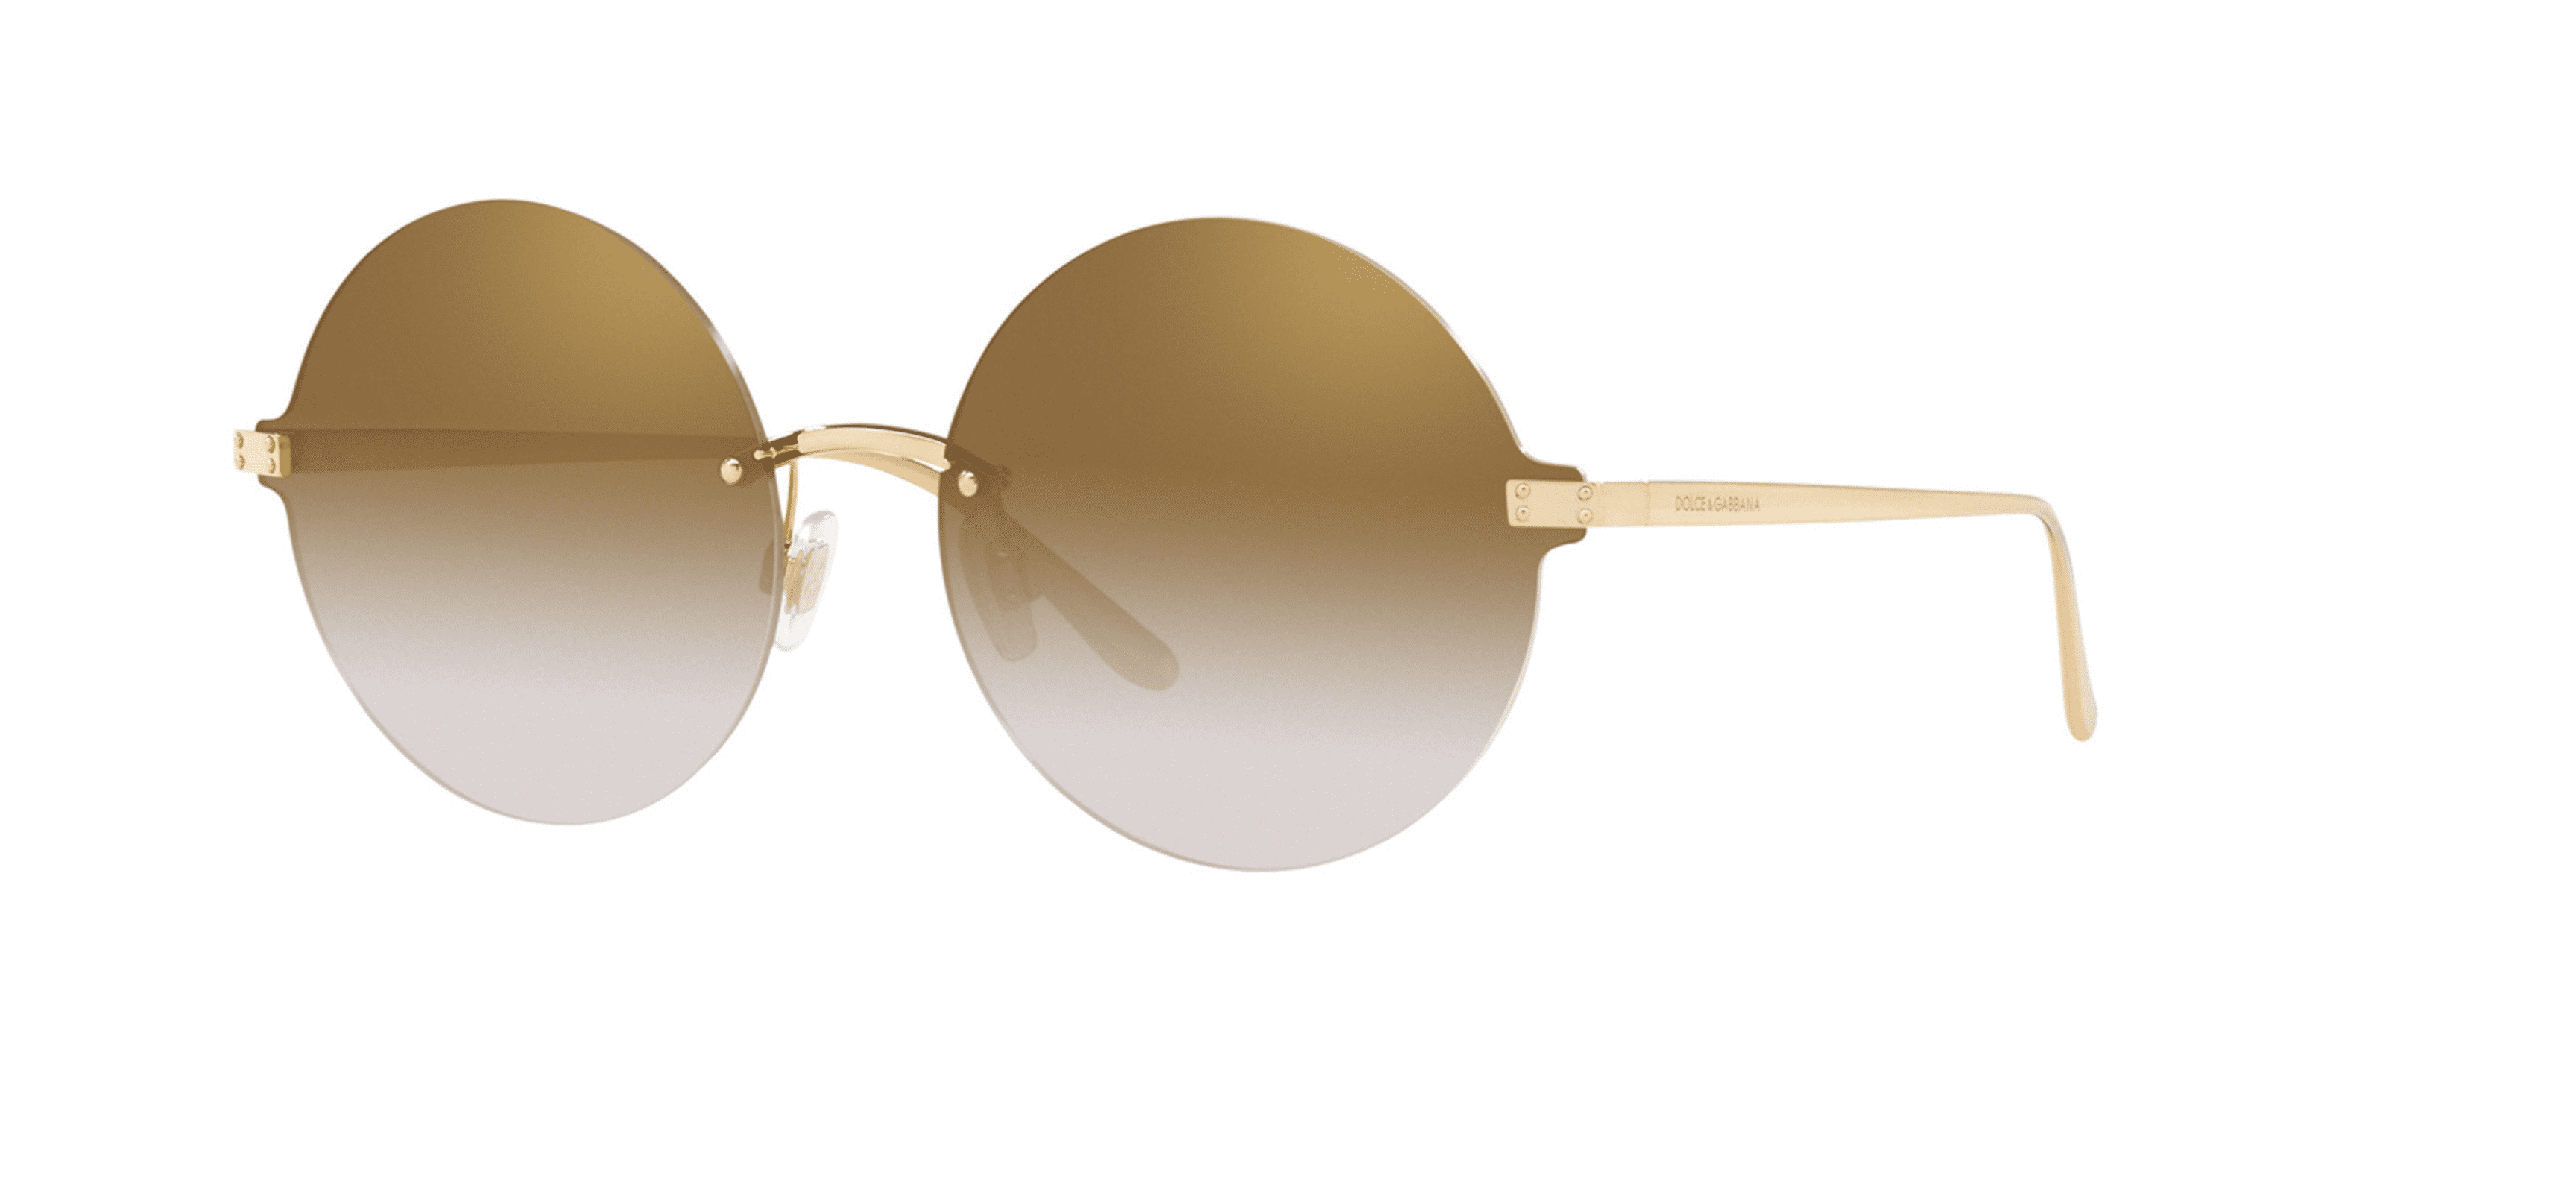 Dolce & Gabbana DG 2228 02/6E Sunglasses Gold Frame Gold Mirror 62mm ...